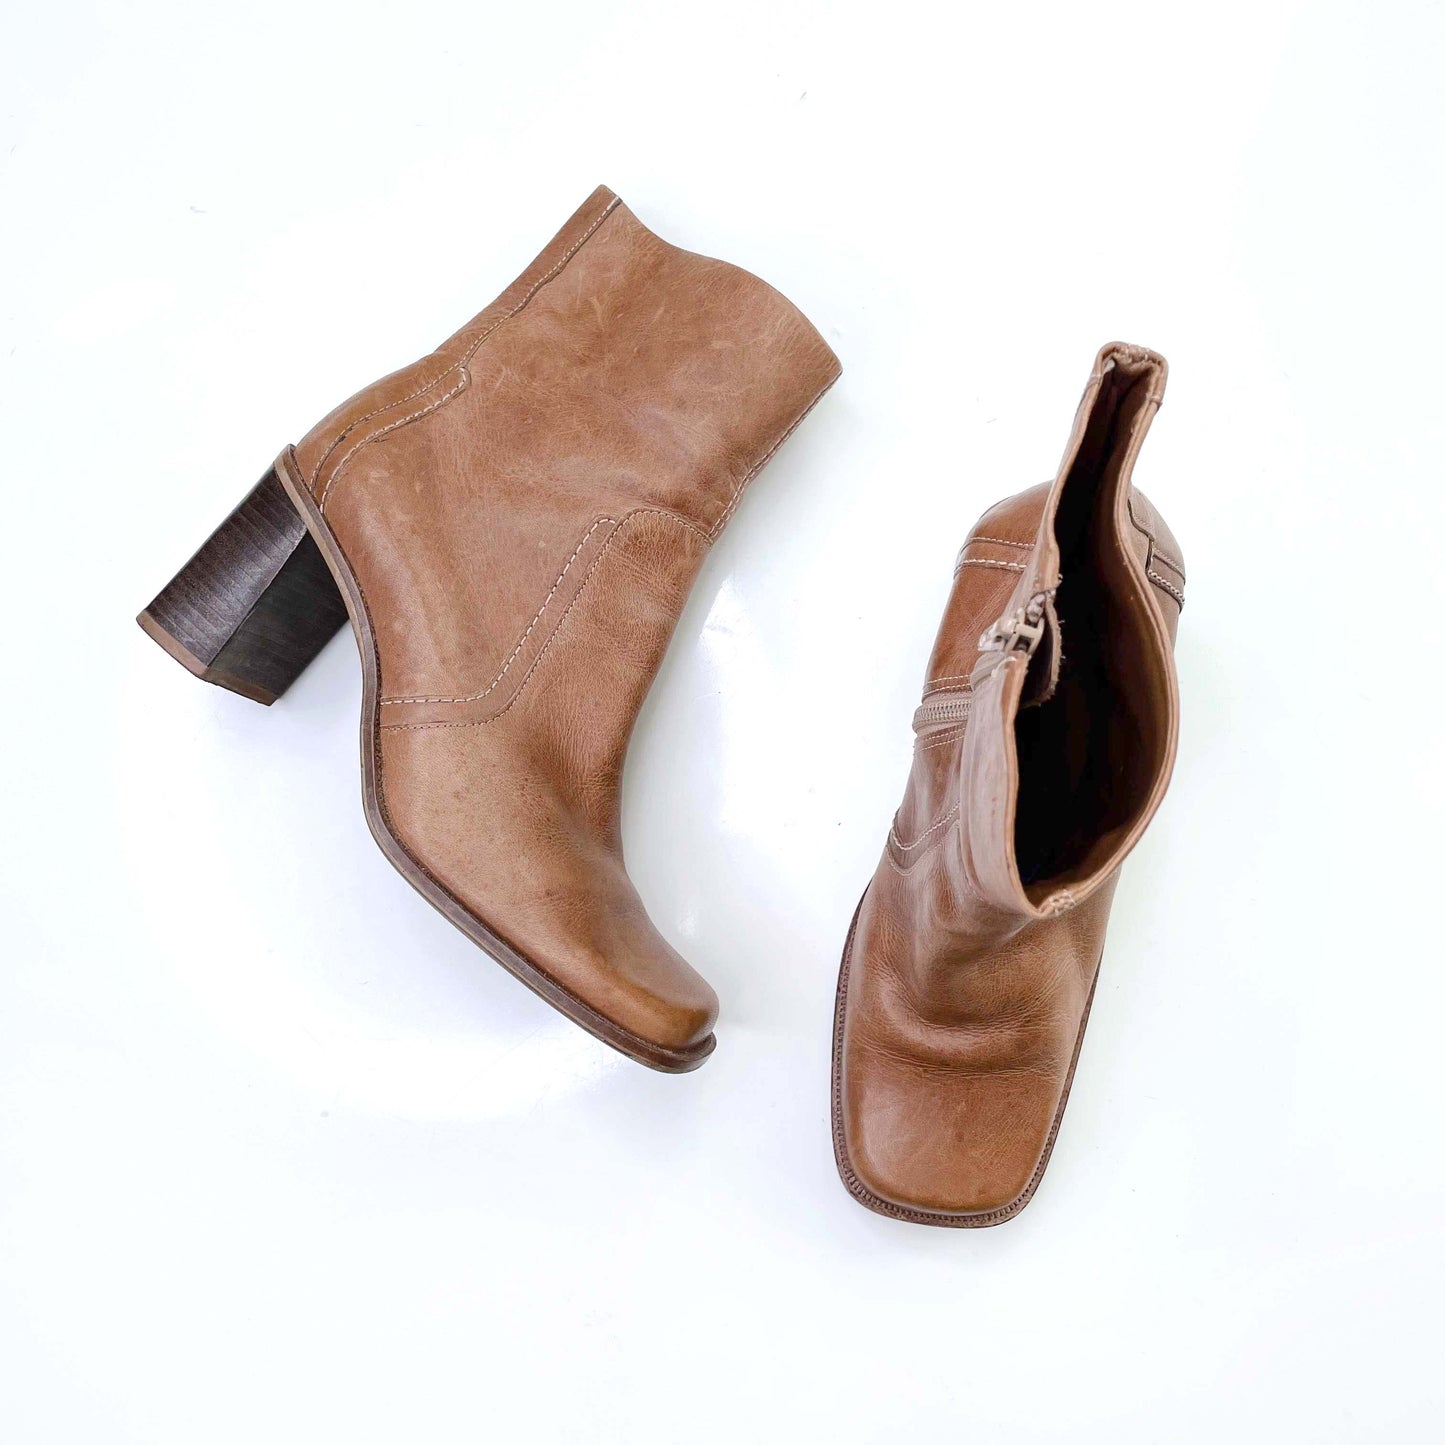 vintage faith tan leather square toe heeled boot - size 6.5